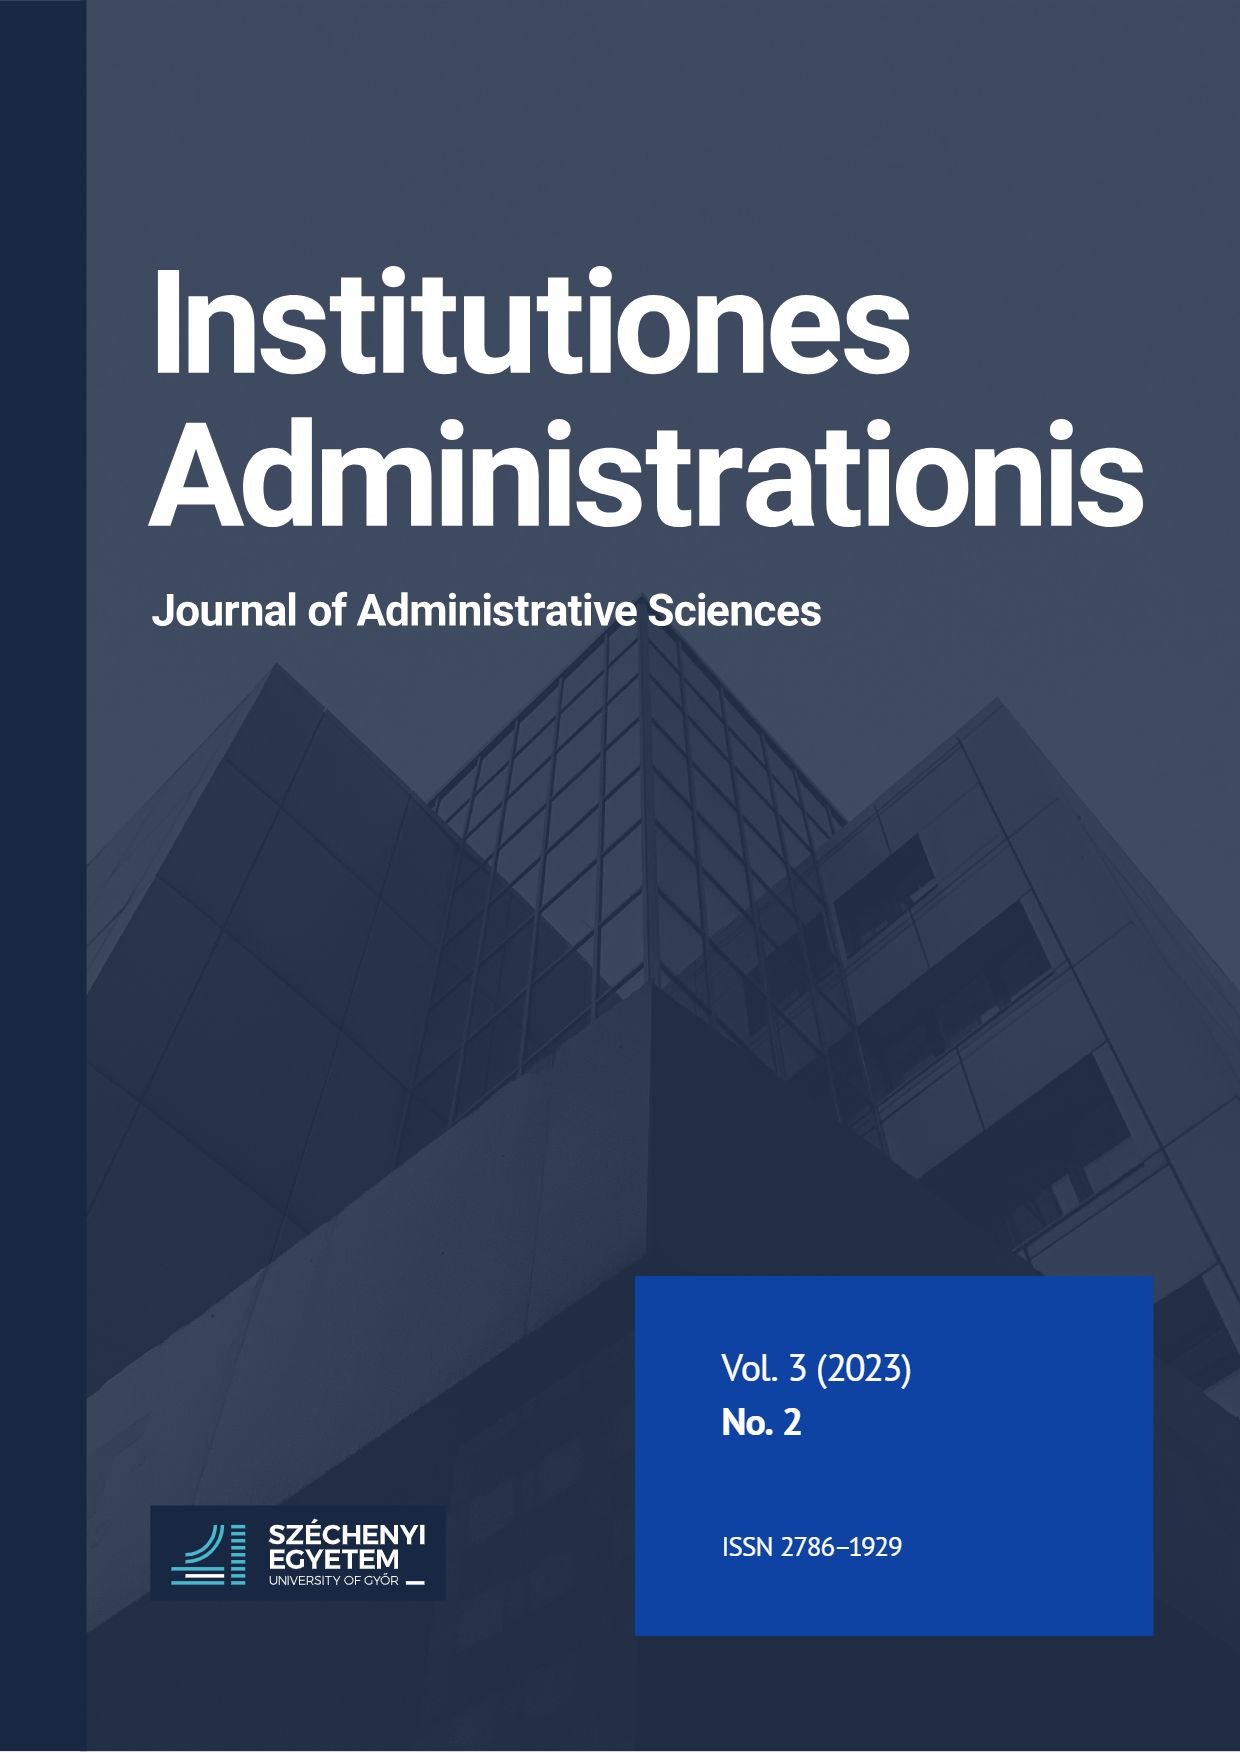 Kálmán, János (Ed.), The Basic Institutions of Financial Law (ORAC, 2022) Cover Image